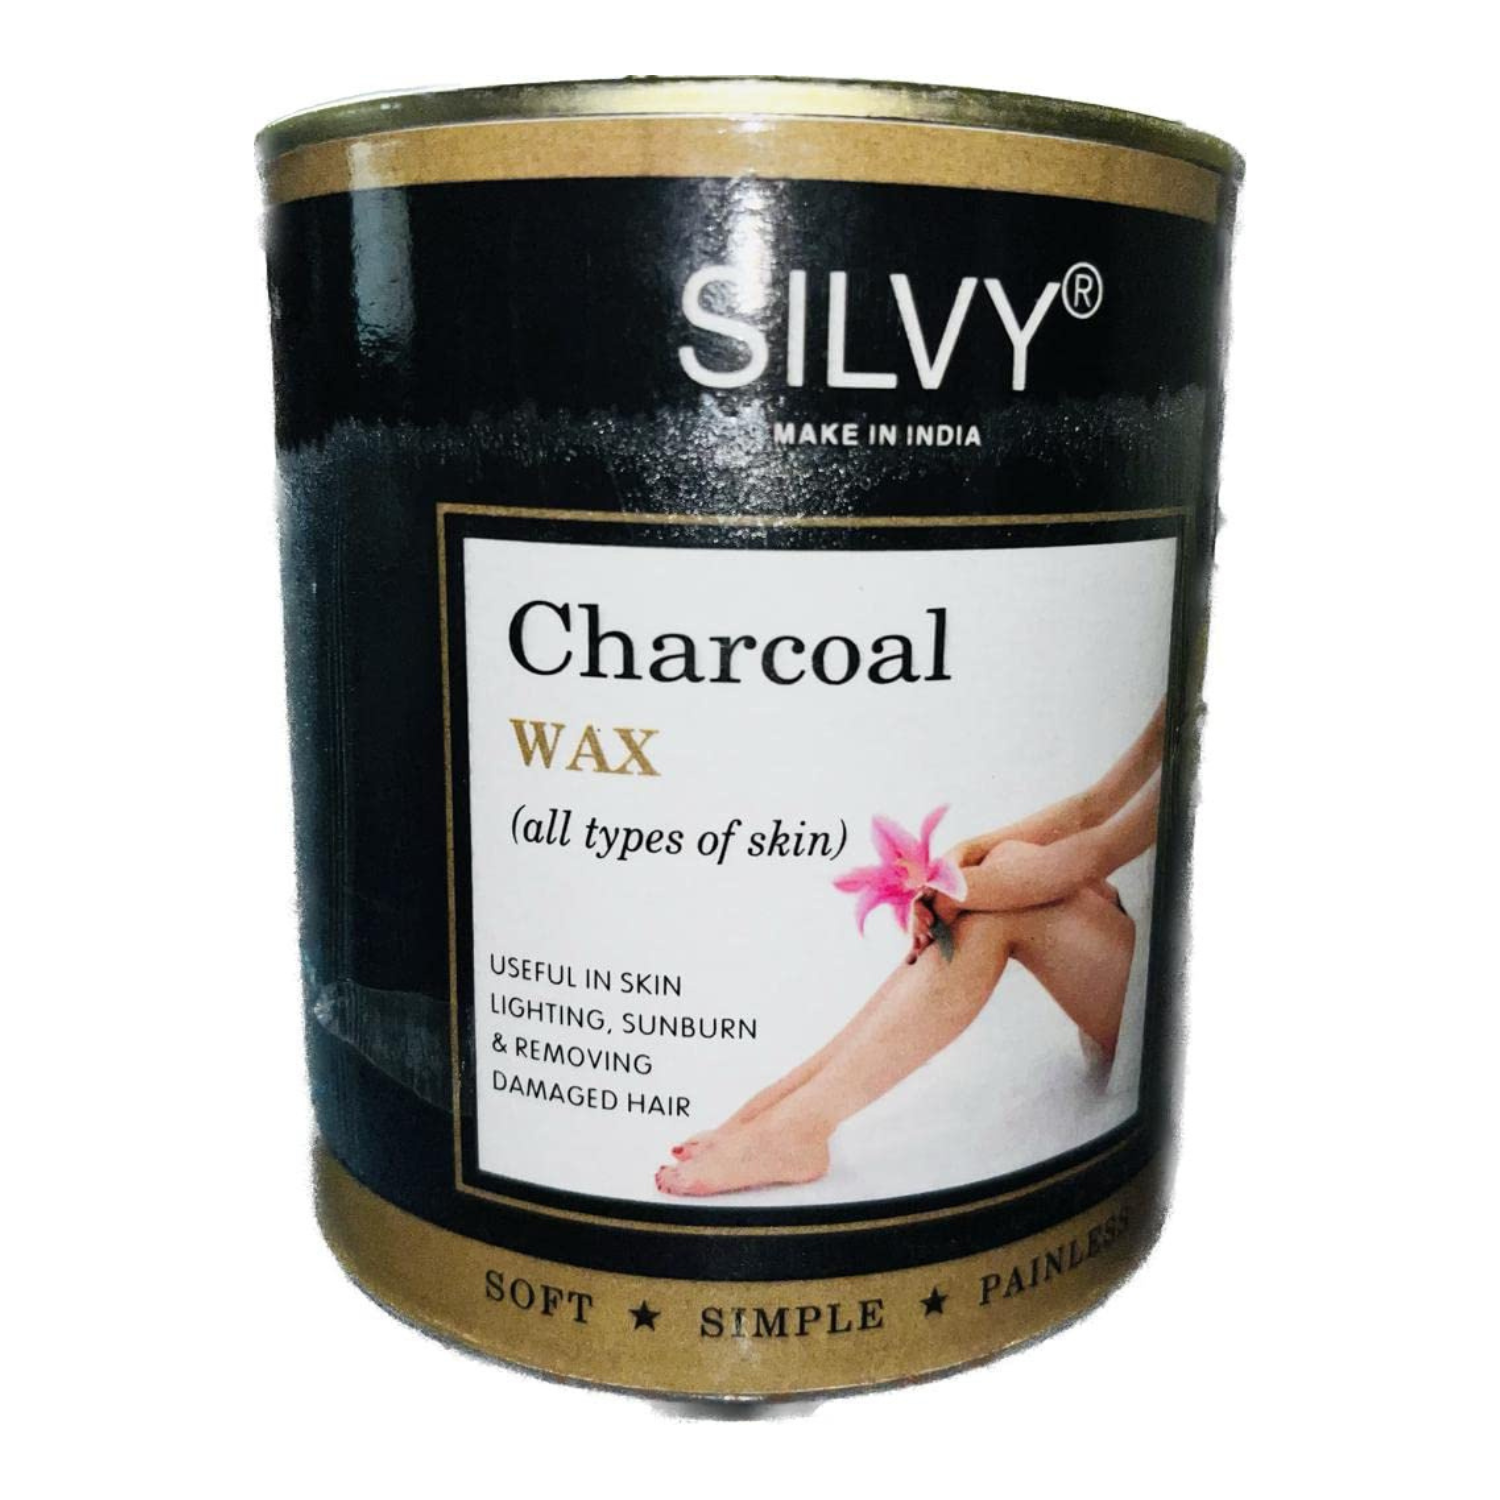 Silvy Charcoal Wax